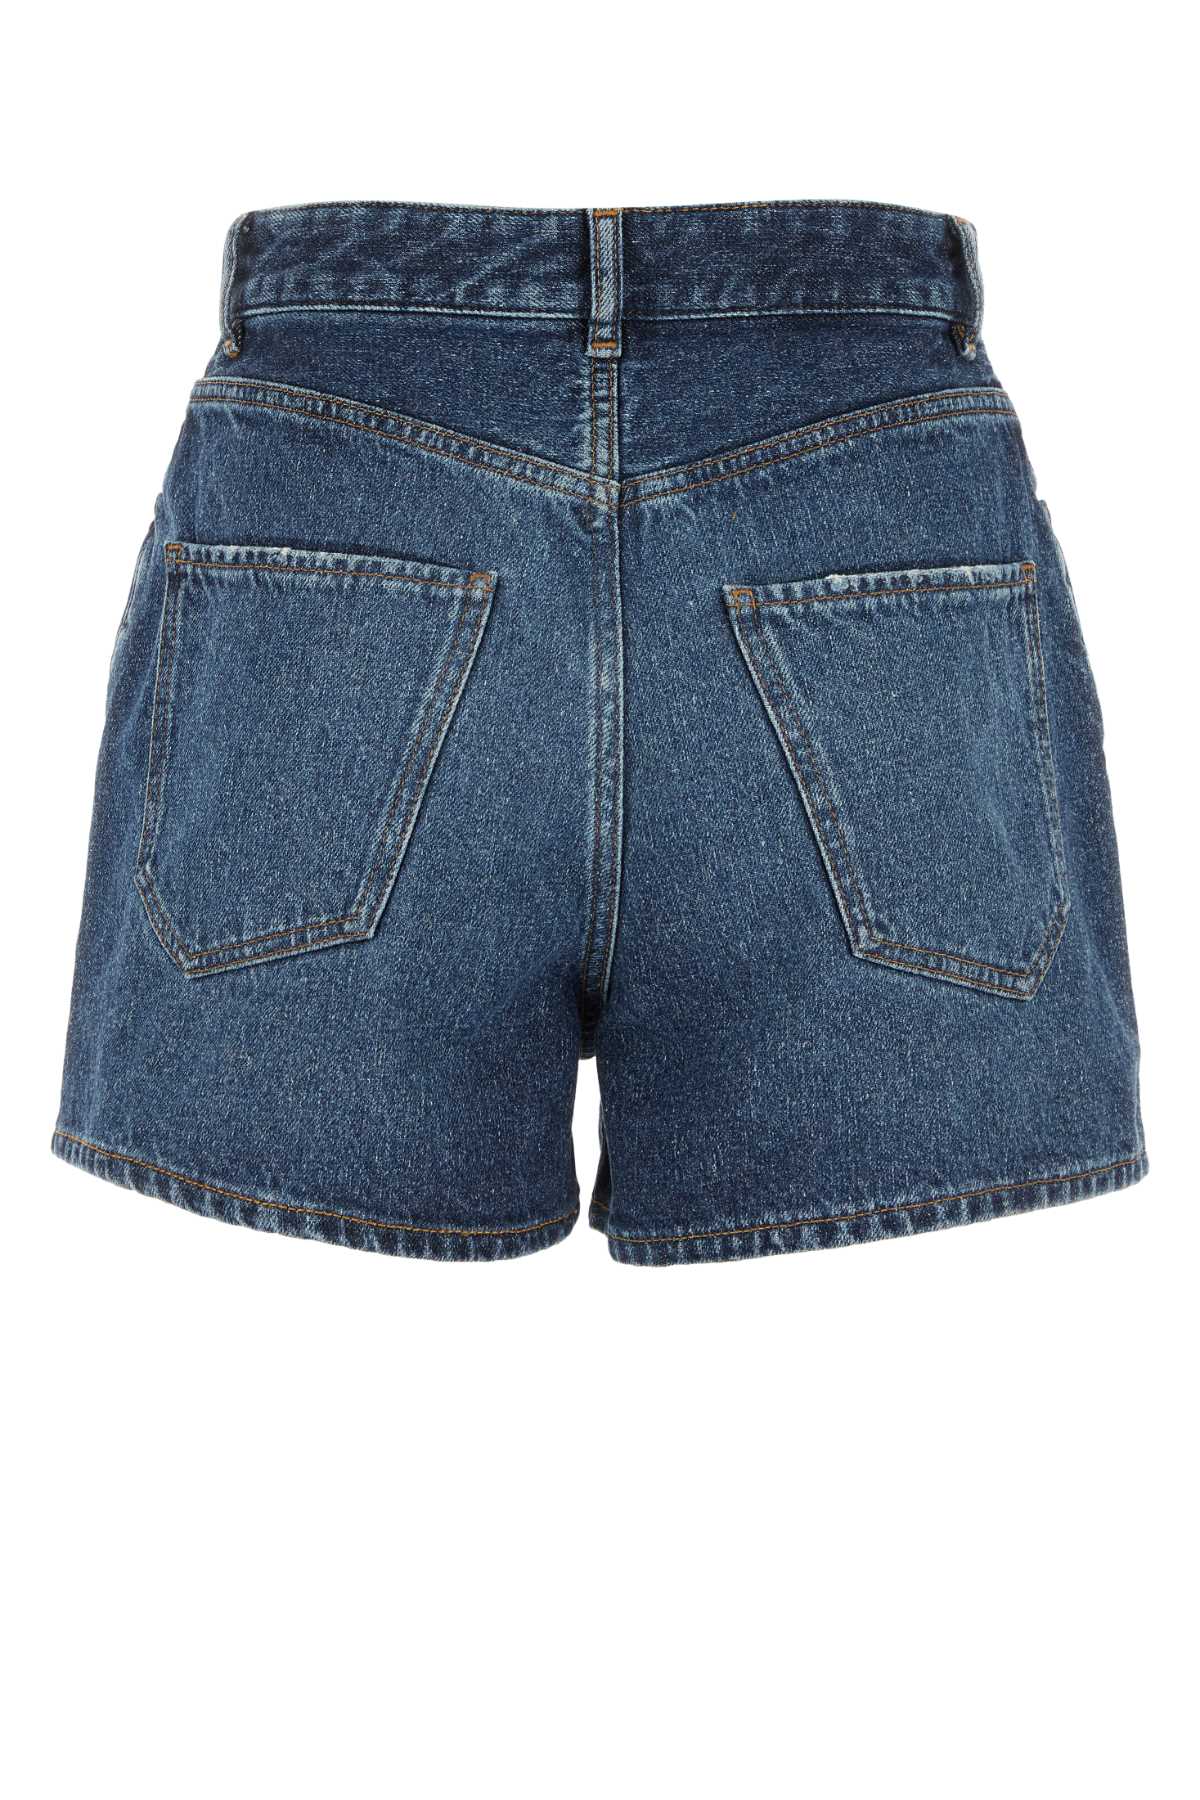 Chloé Denim Shorts In Fadeddenim